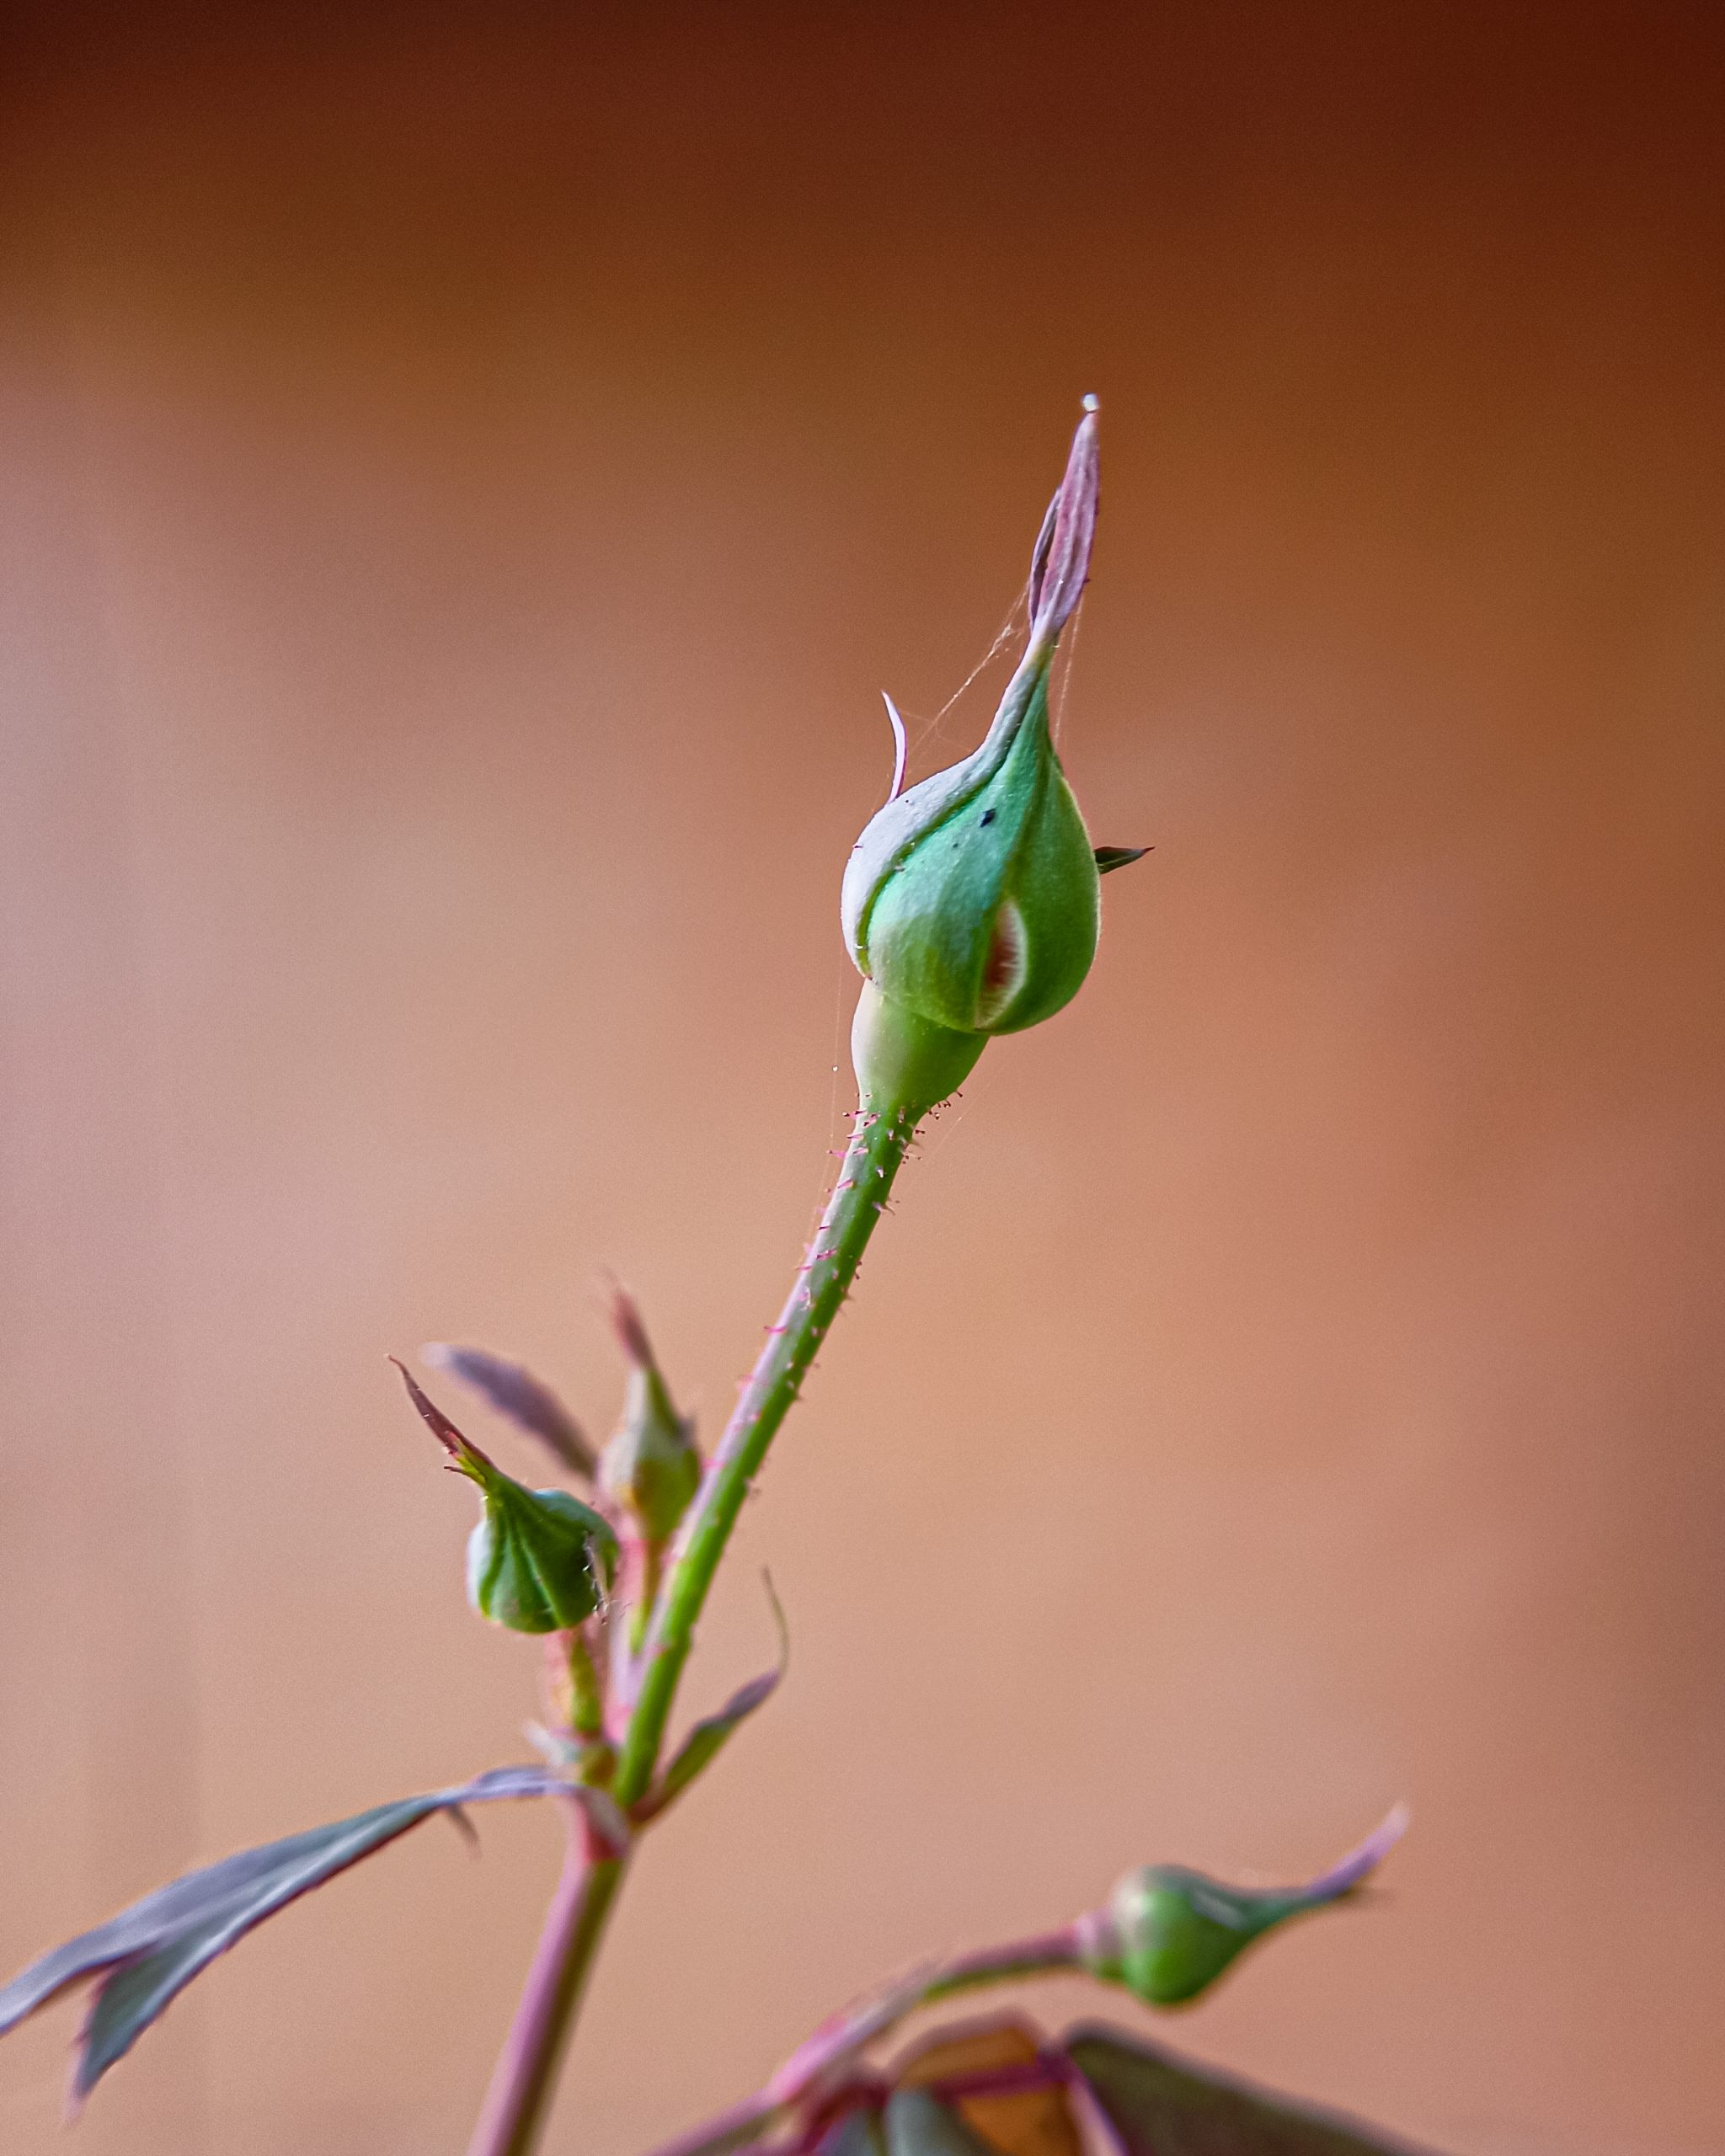 Bud of a rose